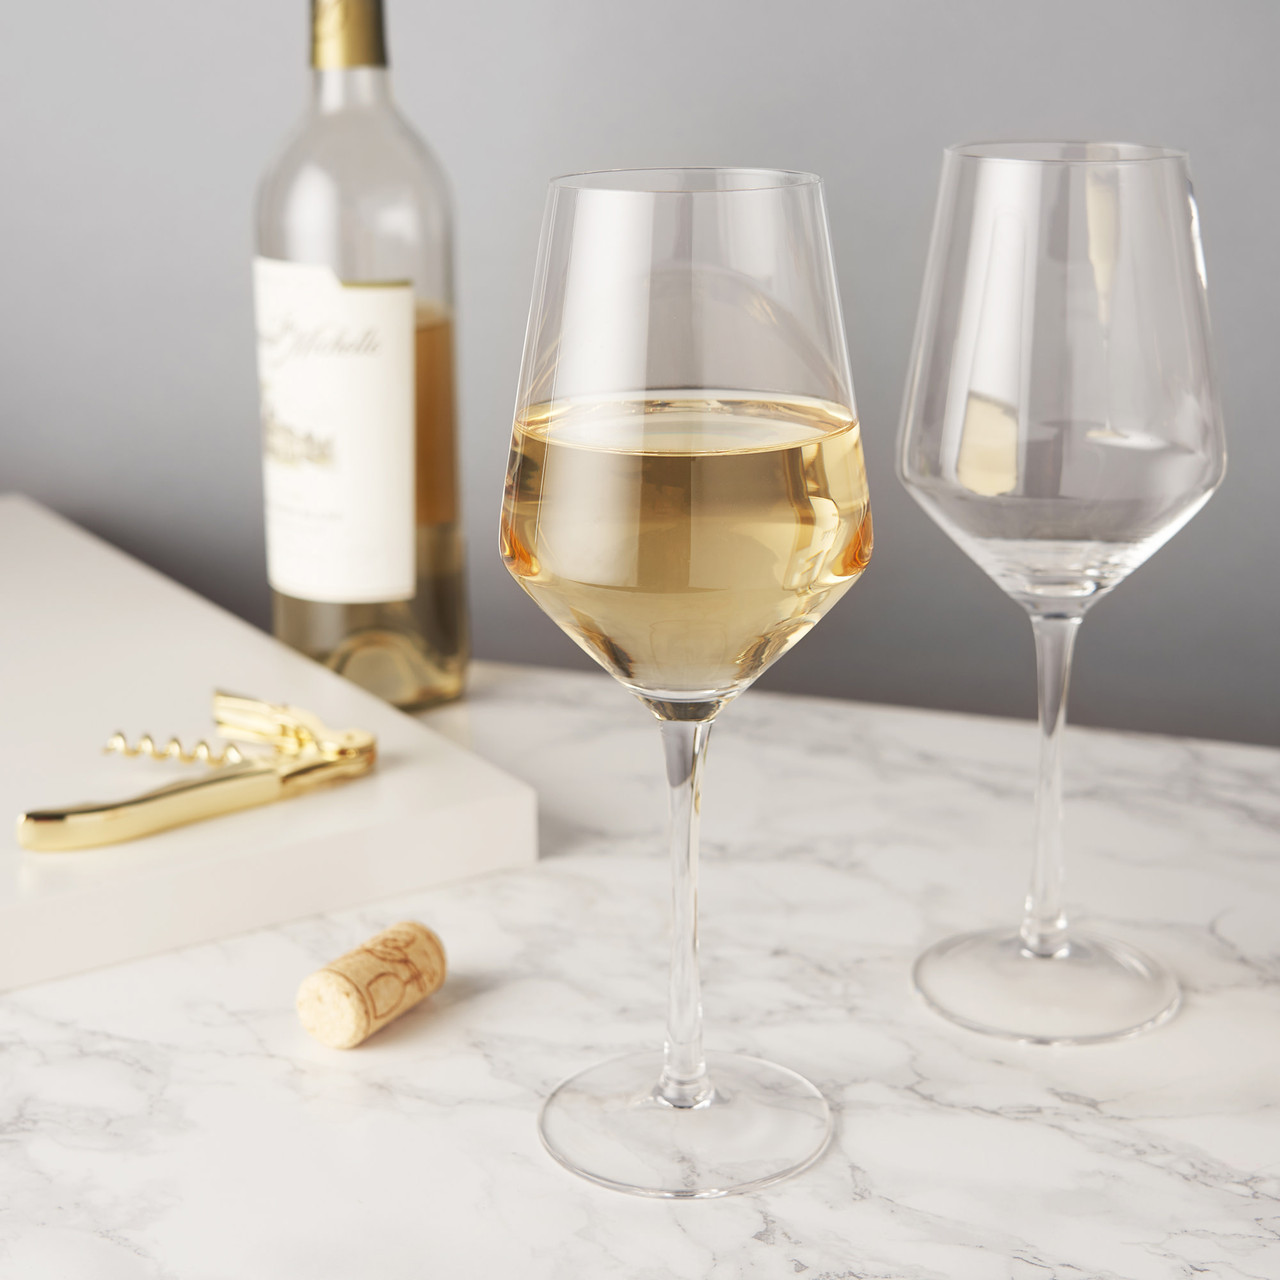 Angled Crystal Chardonnay Glasses (Set of 6) by Viski